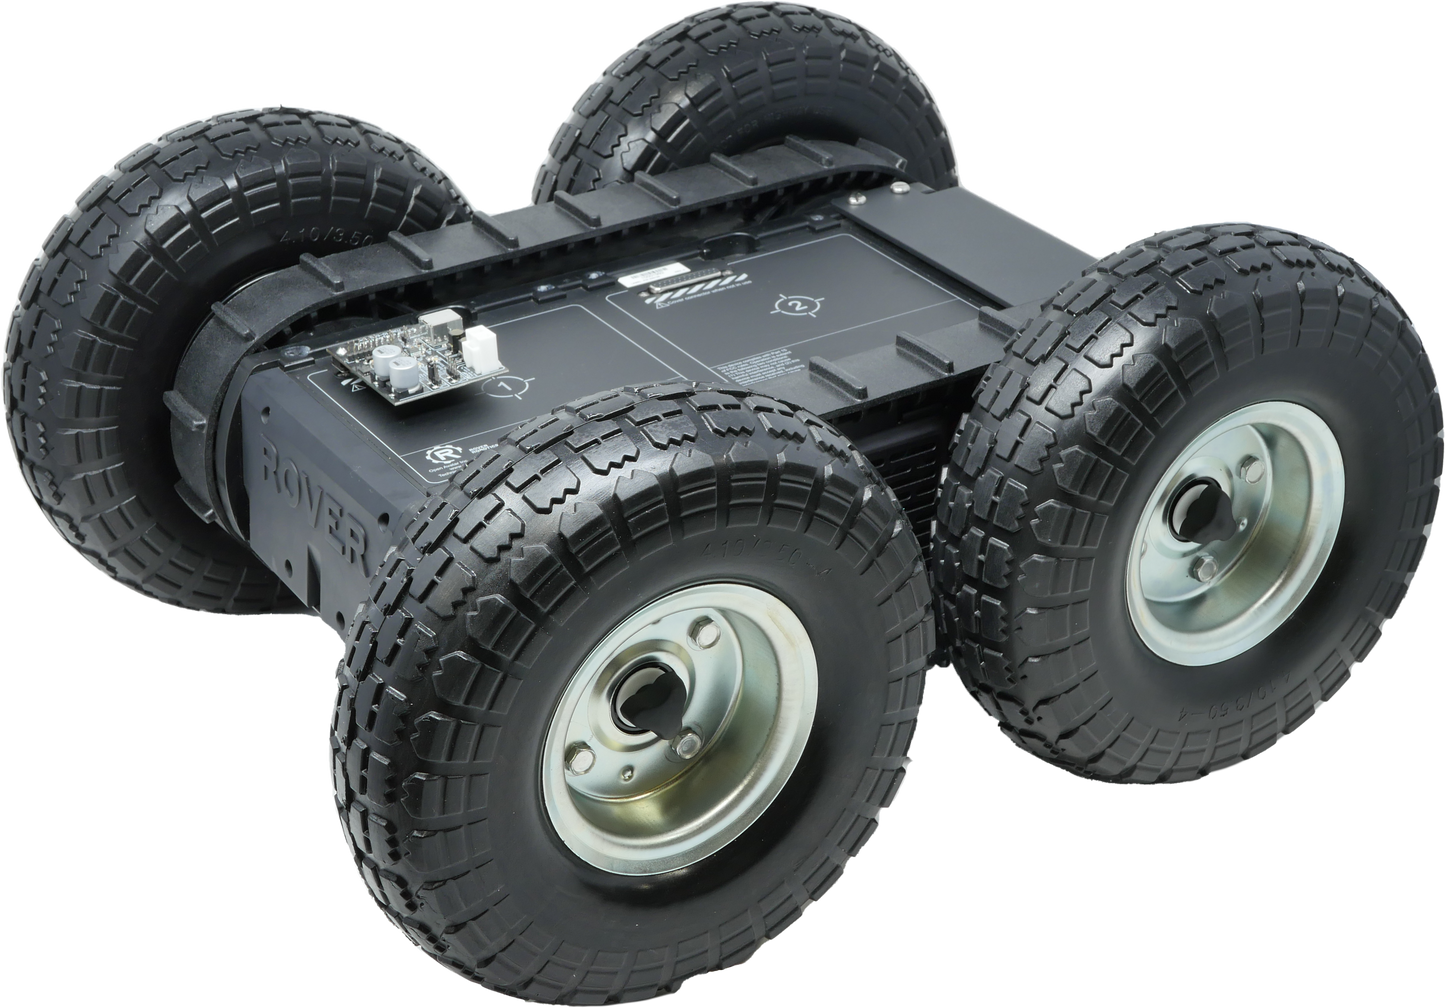 4WD Kit - Rover Robotics, Inc.